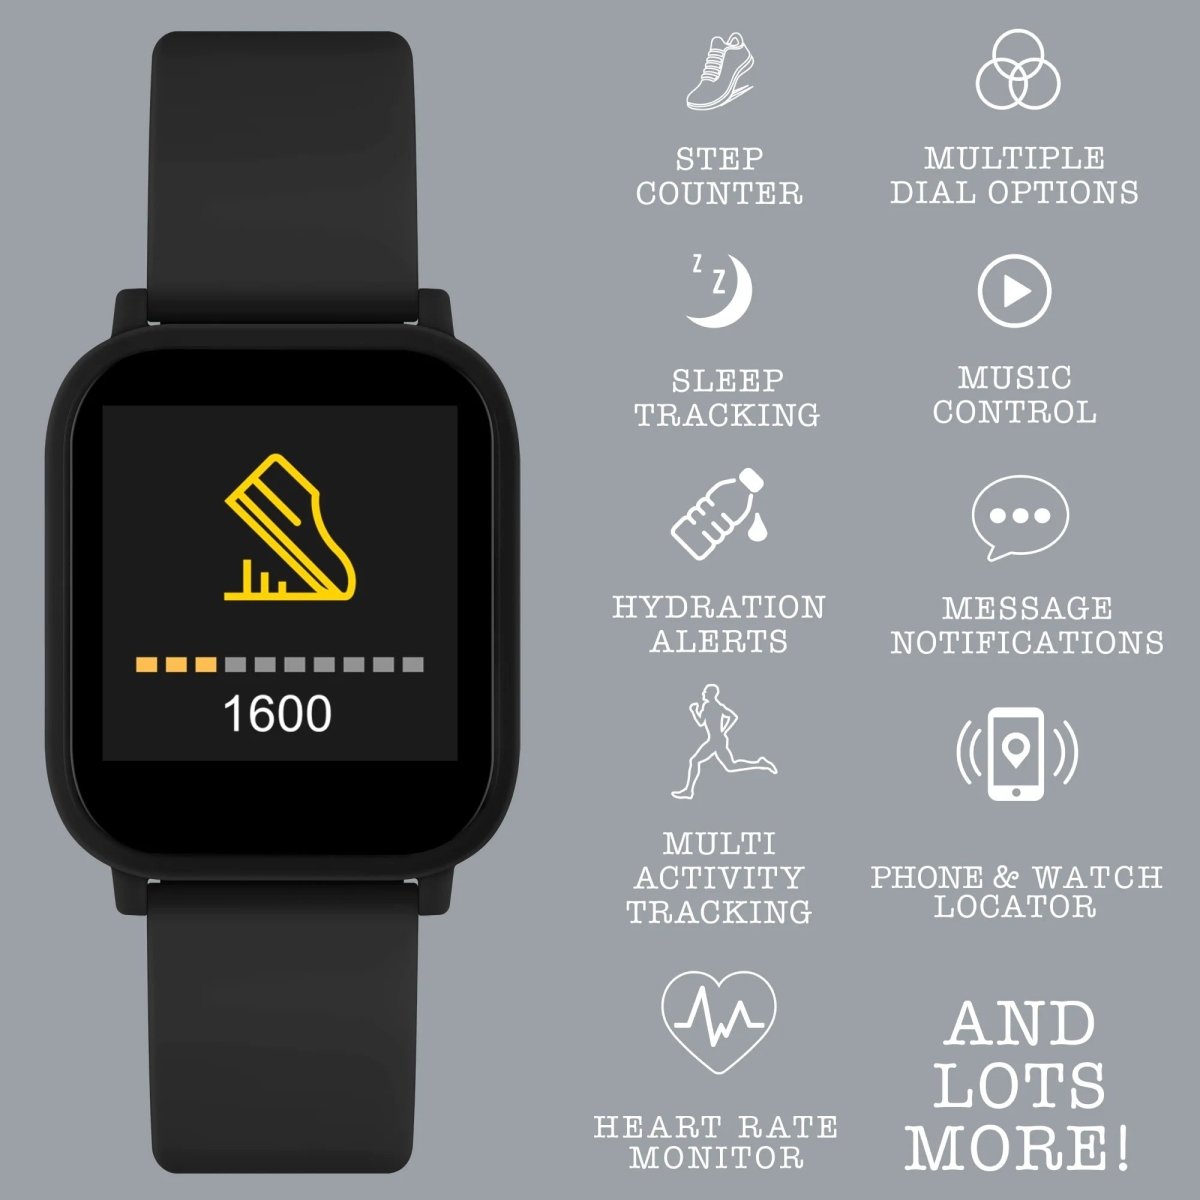 Tikkers TKS10-0002-SETARG Teen Smart Watch and Earbuds Set Black Silicon Strap - Κοσμηματοπωλείο Goldy